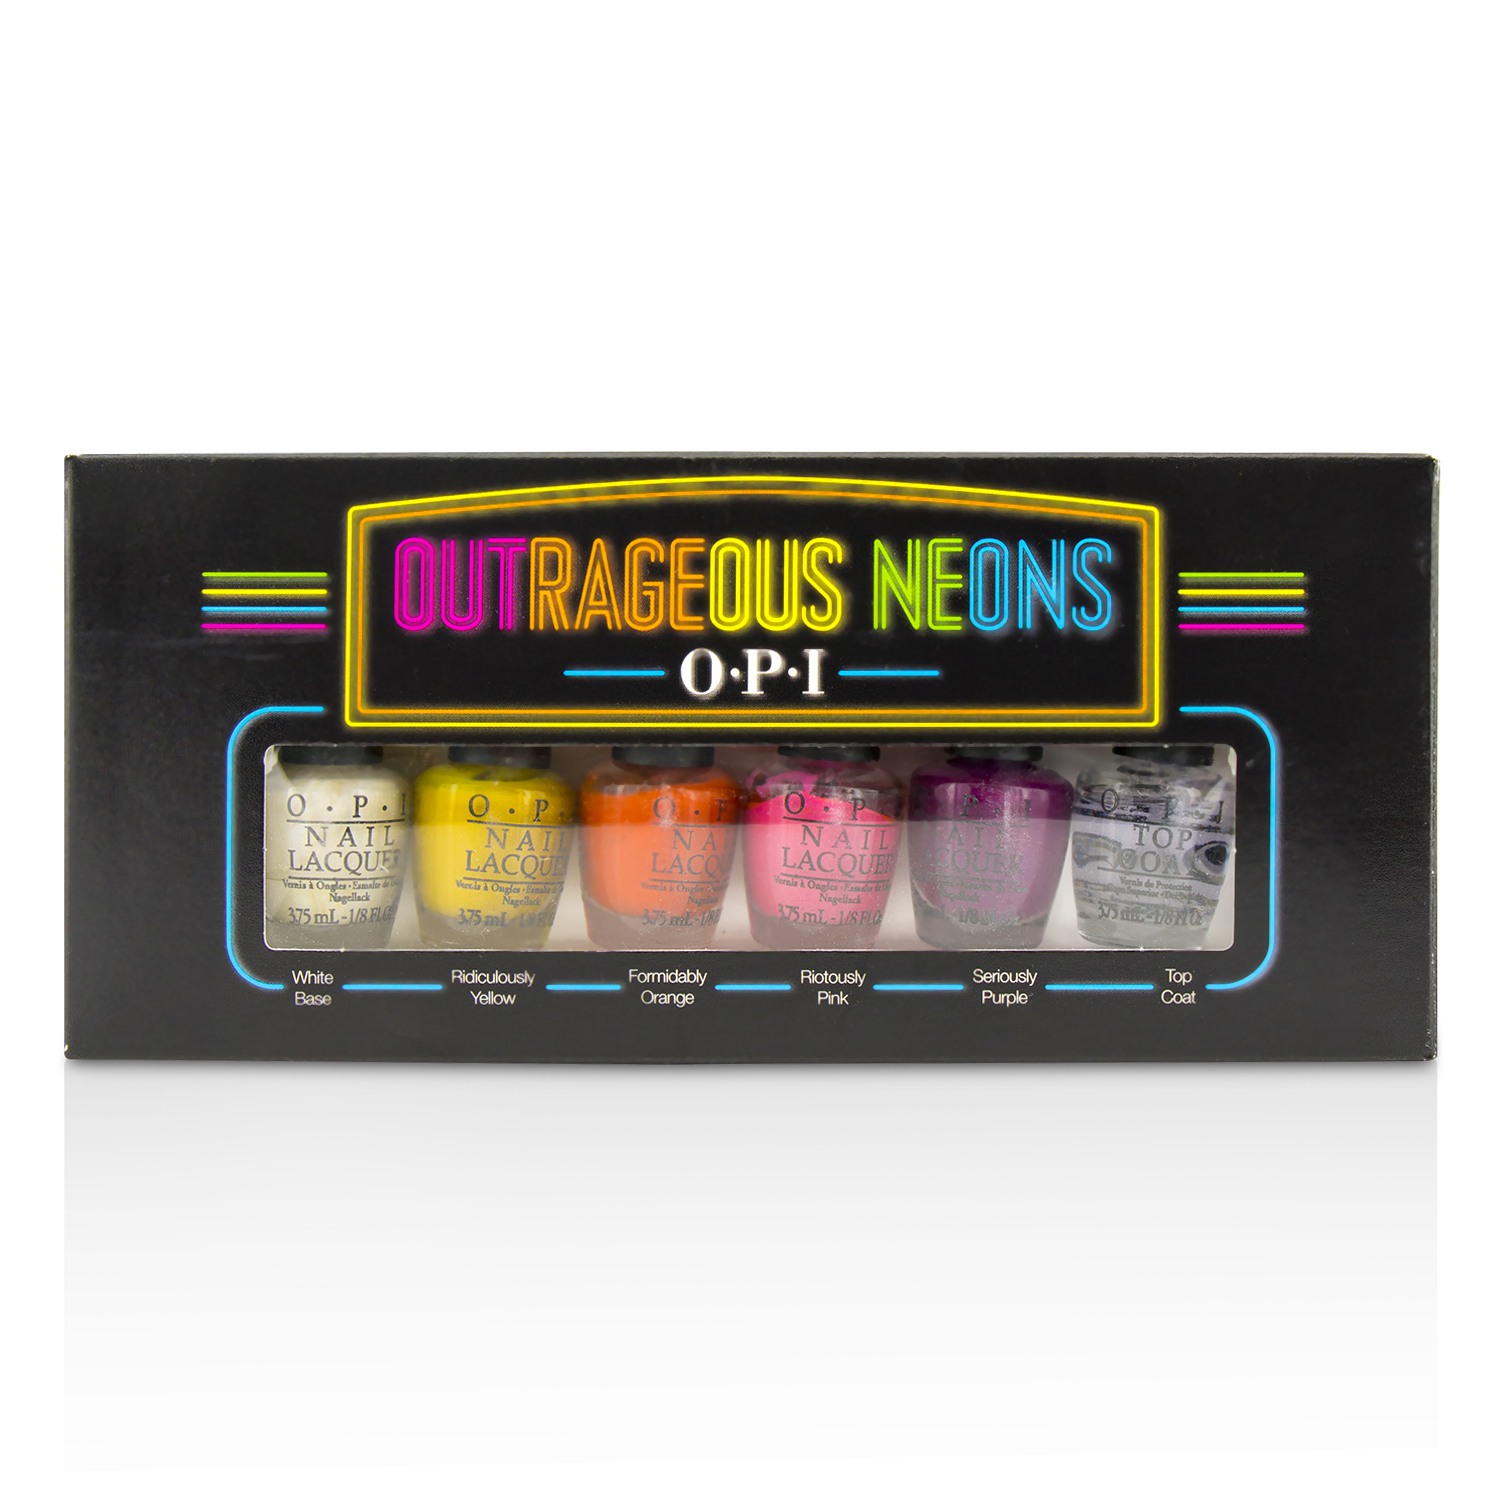 Outrageous Neons Mini Nail Lacquer Set O.P.I Image